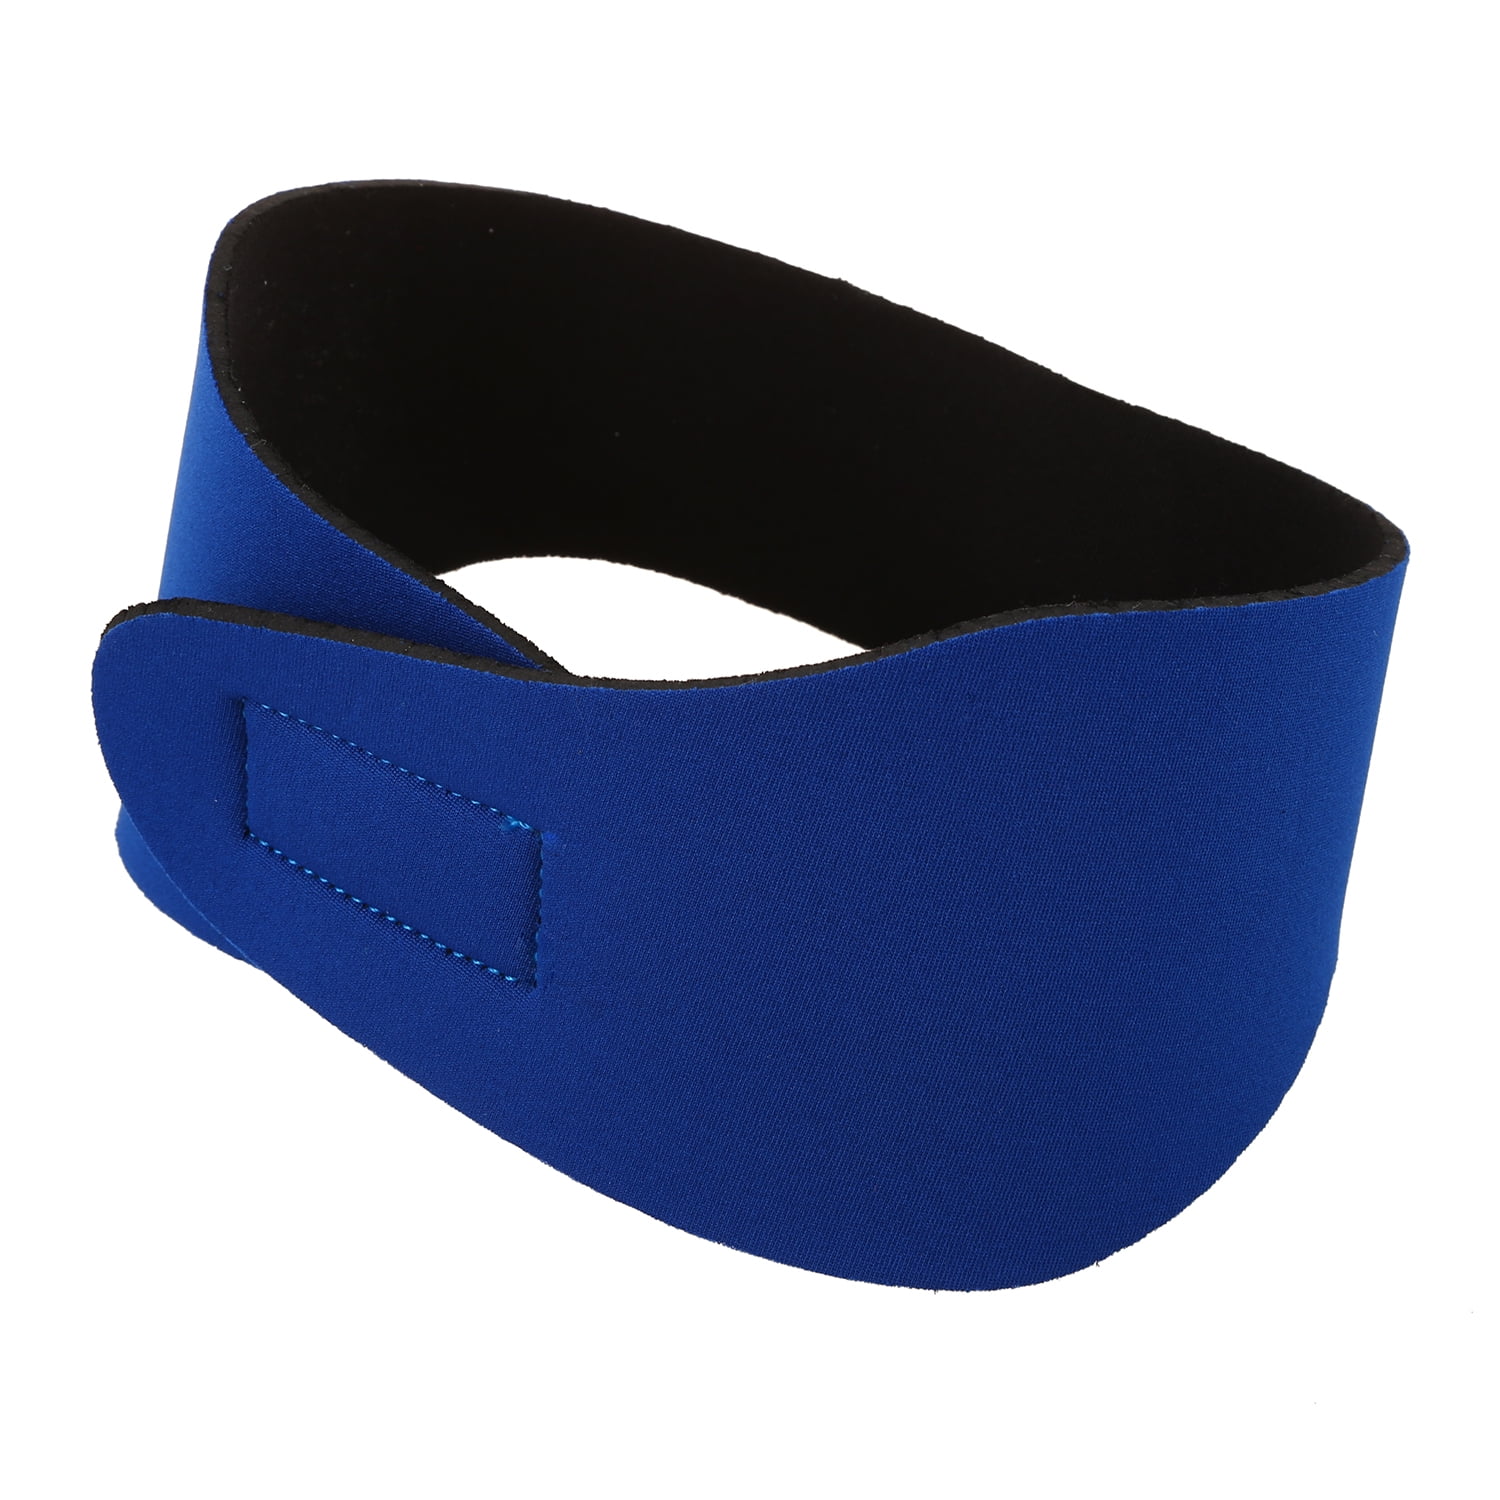 Swimming Wrap Headband Neoprene Water Gear For Water Sports Accessories New 1 pc 